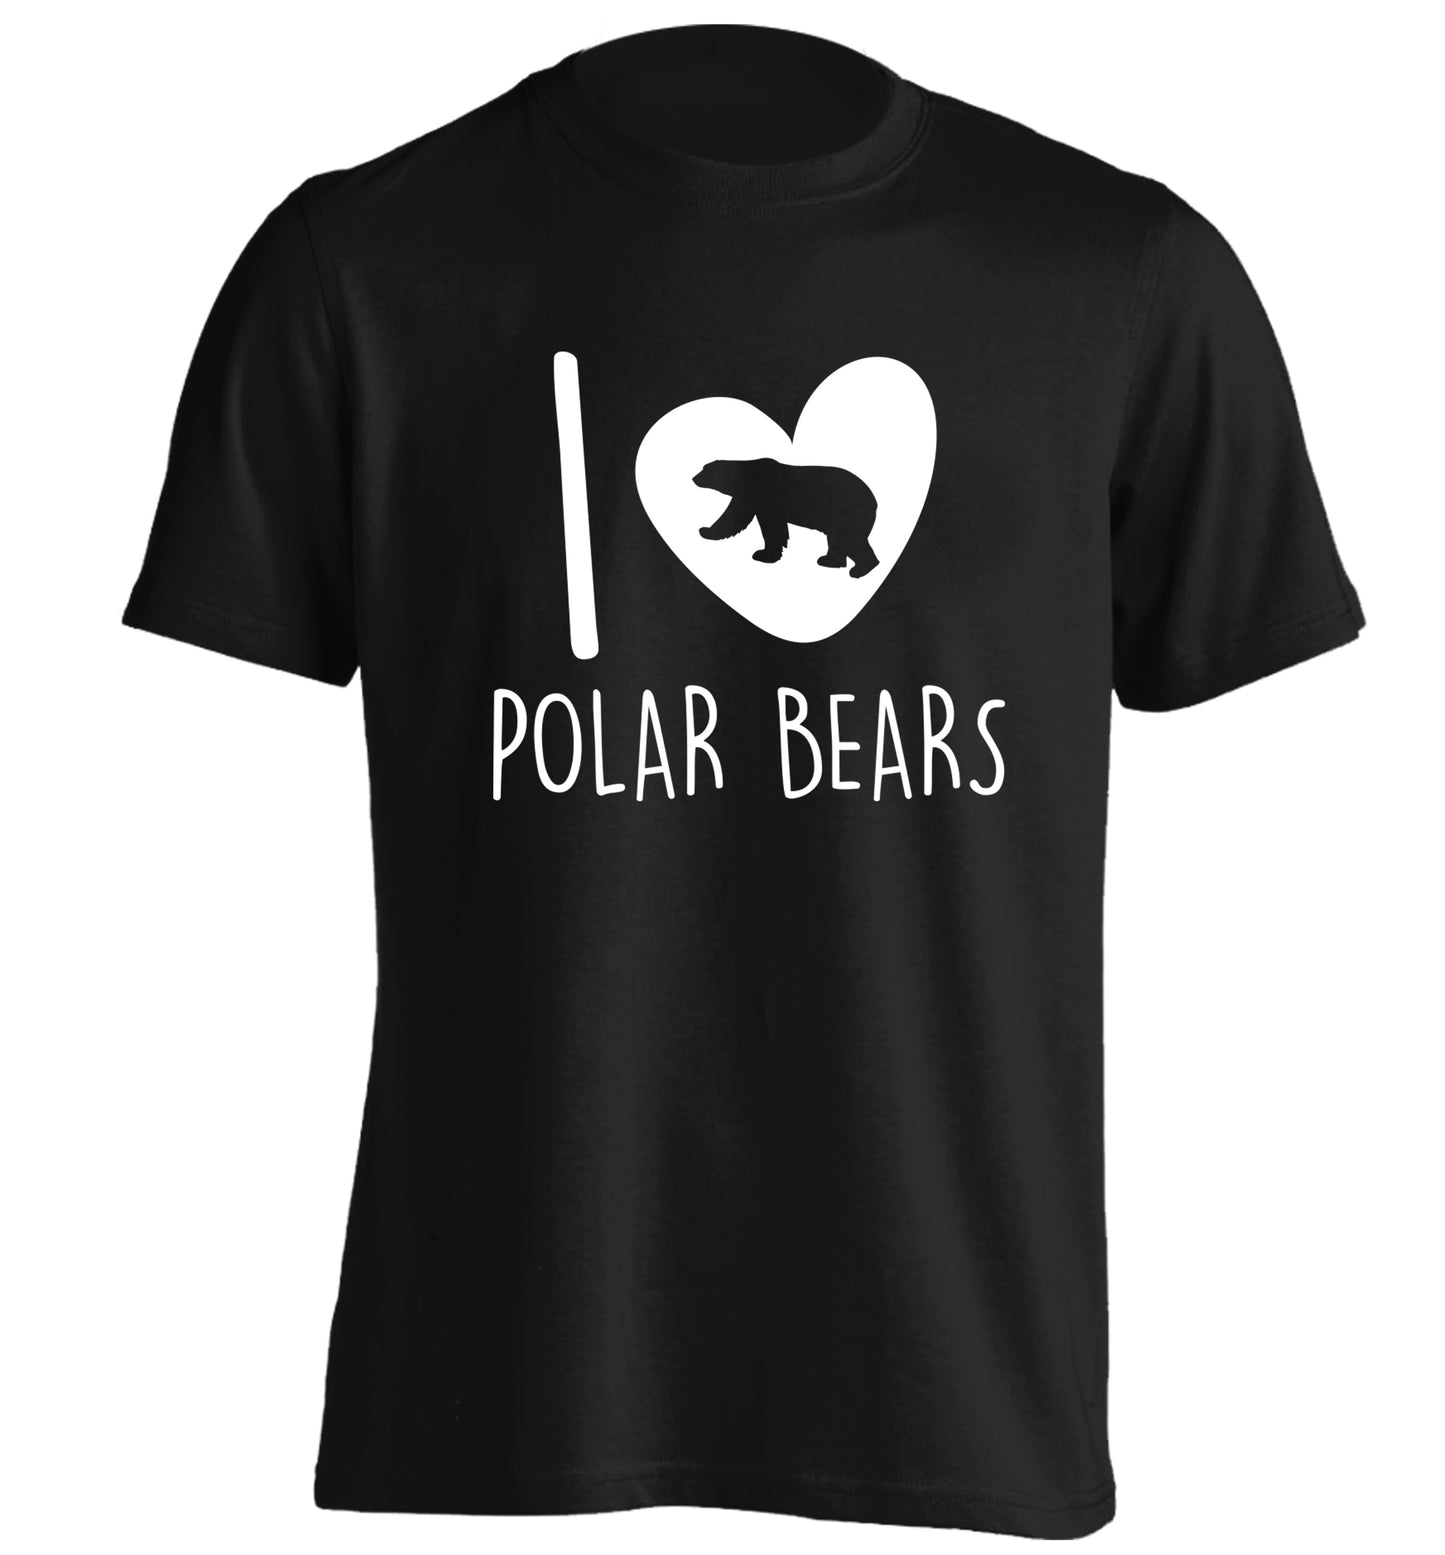 I Love Polar Bears adults unisex black Tshirt 2XL